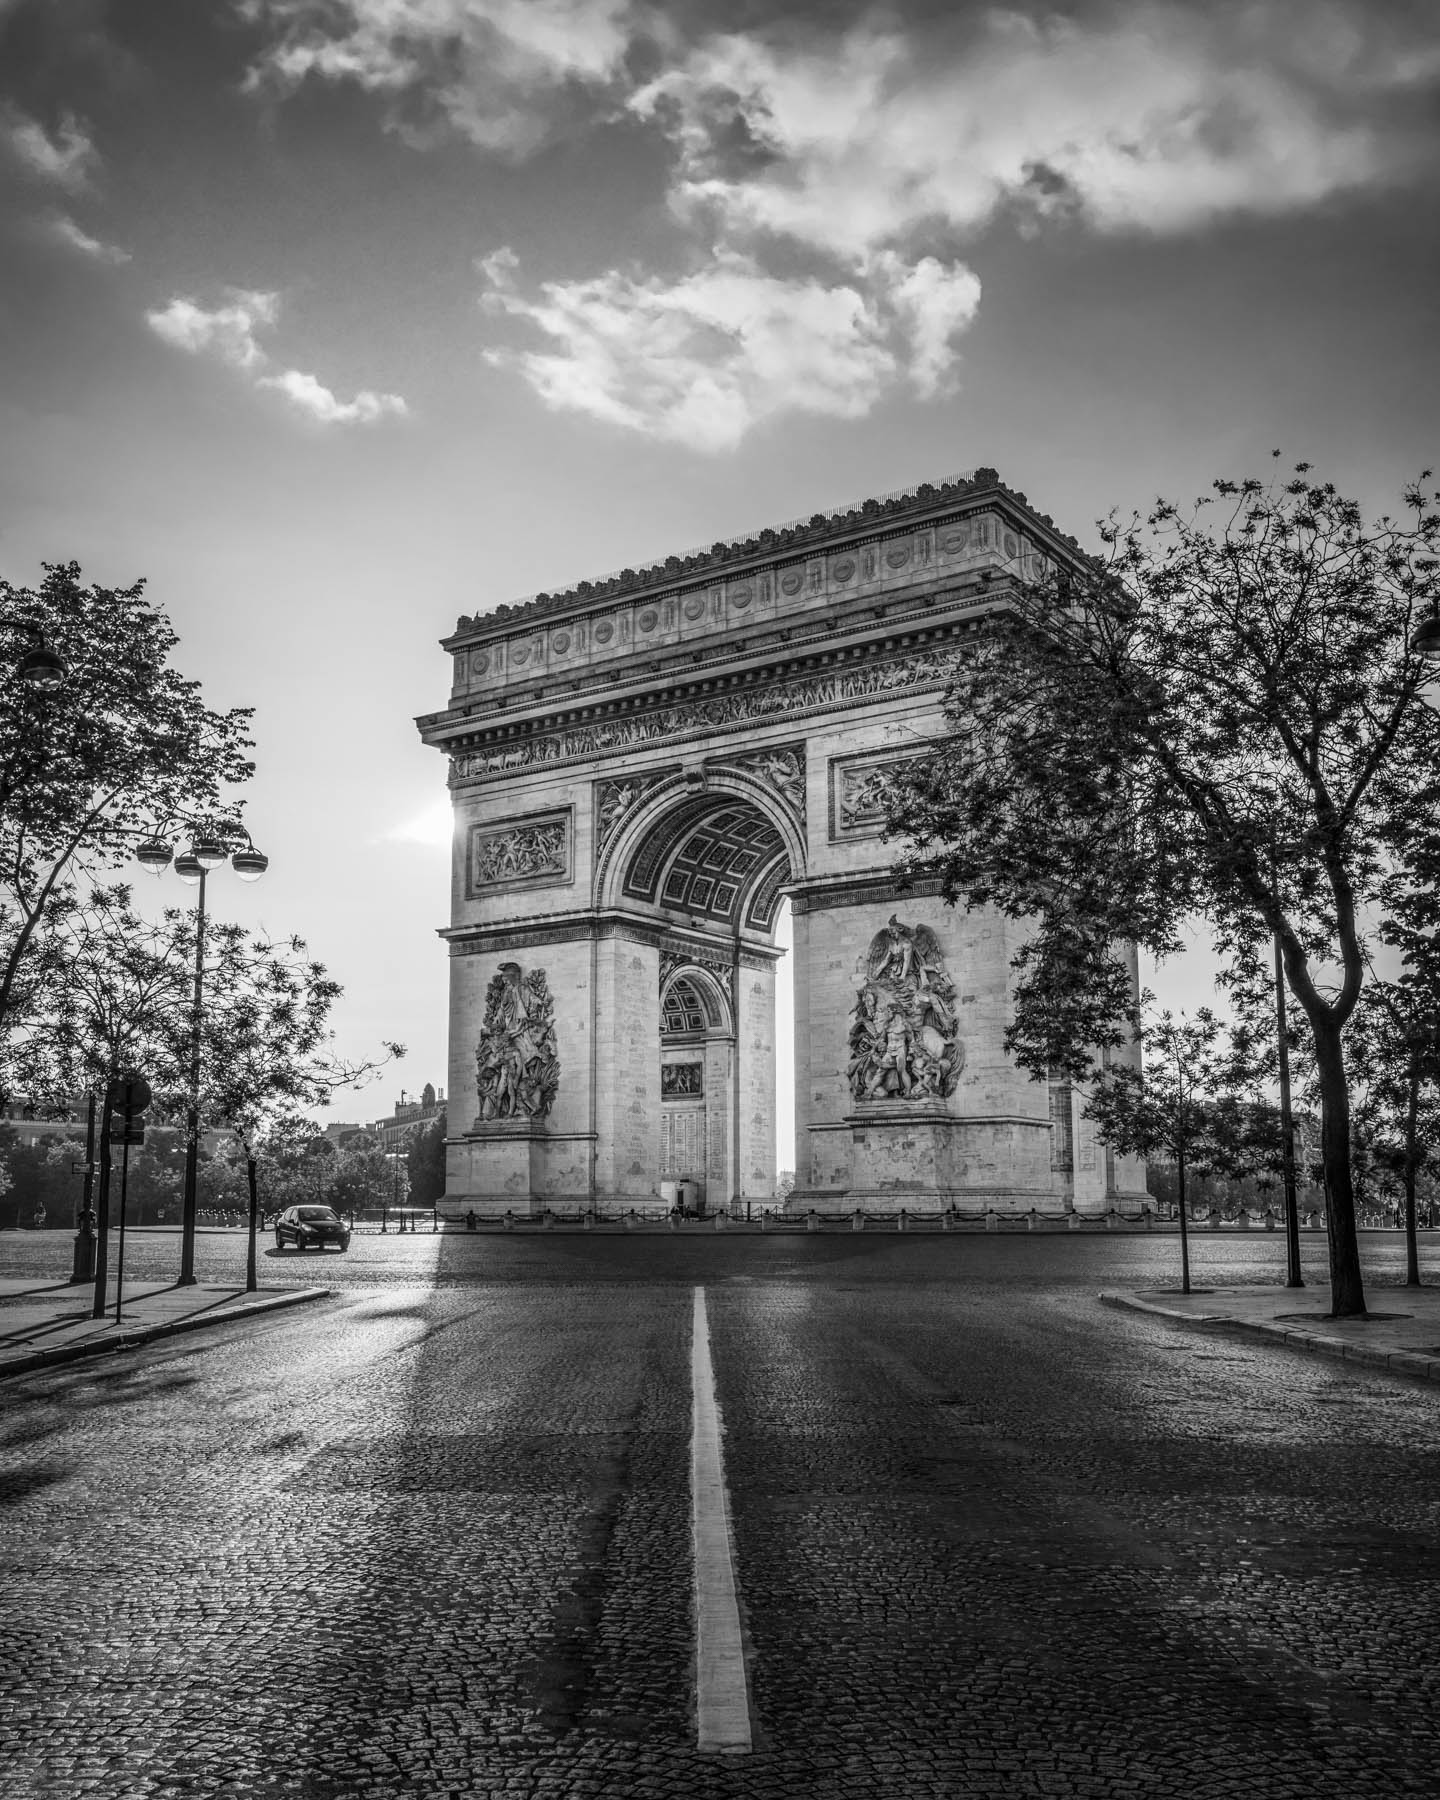 Gate to Paris - Black and White Photo - Arc de Triomphe Photos